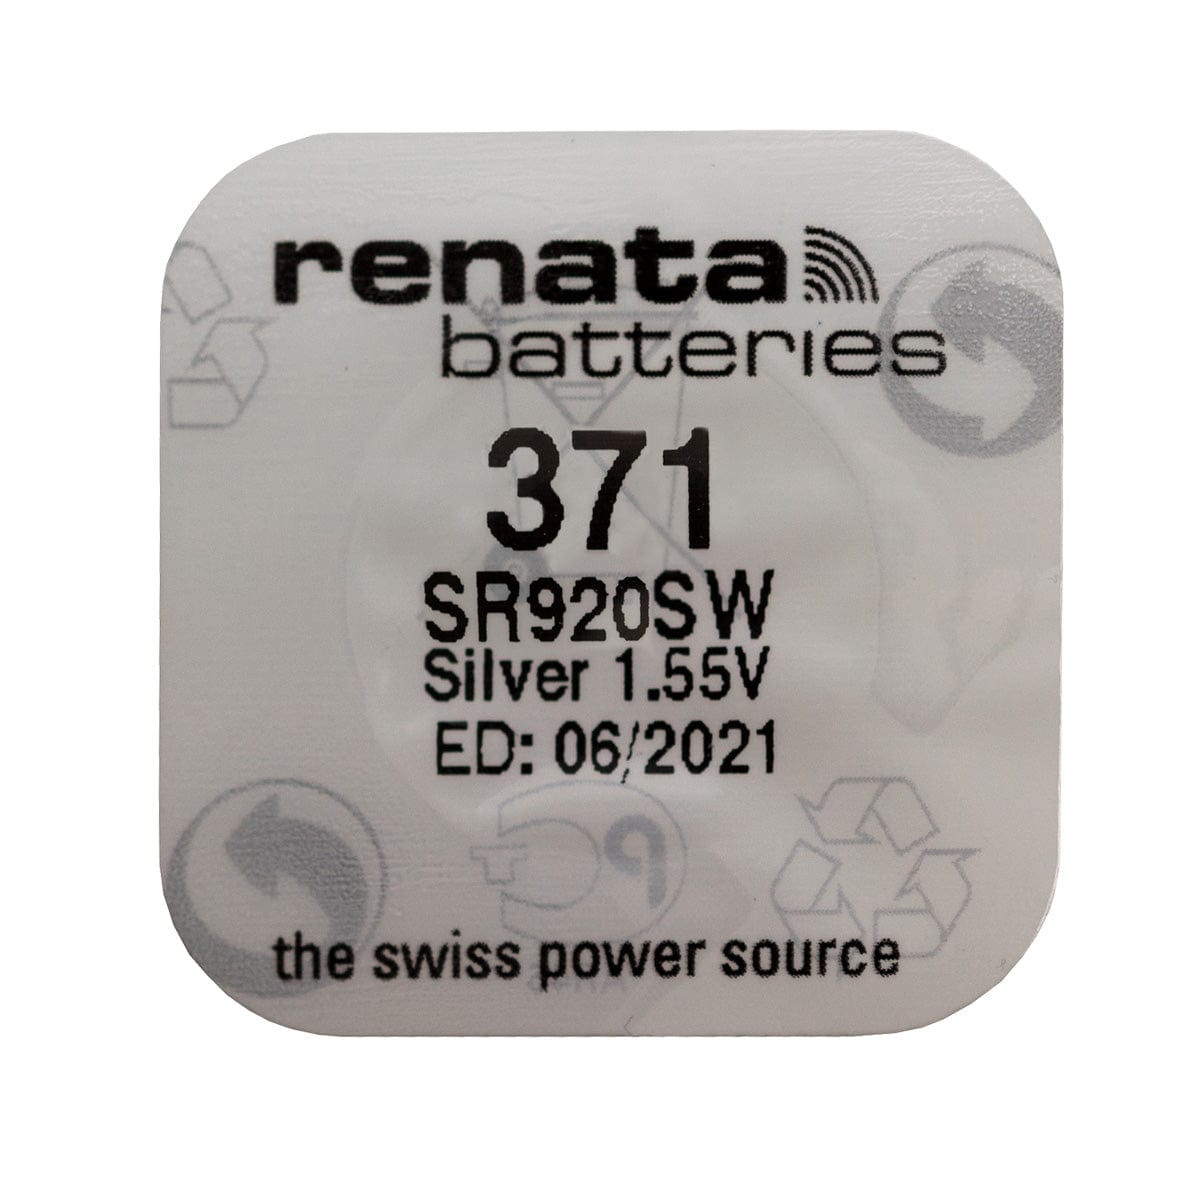 Renata 371 - SR920SW Battery - 100 Pieces